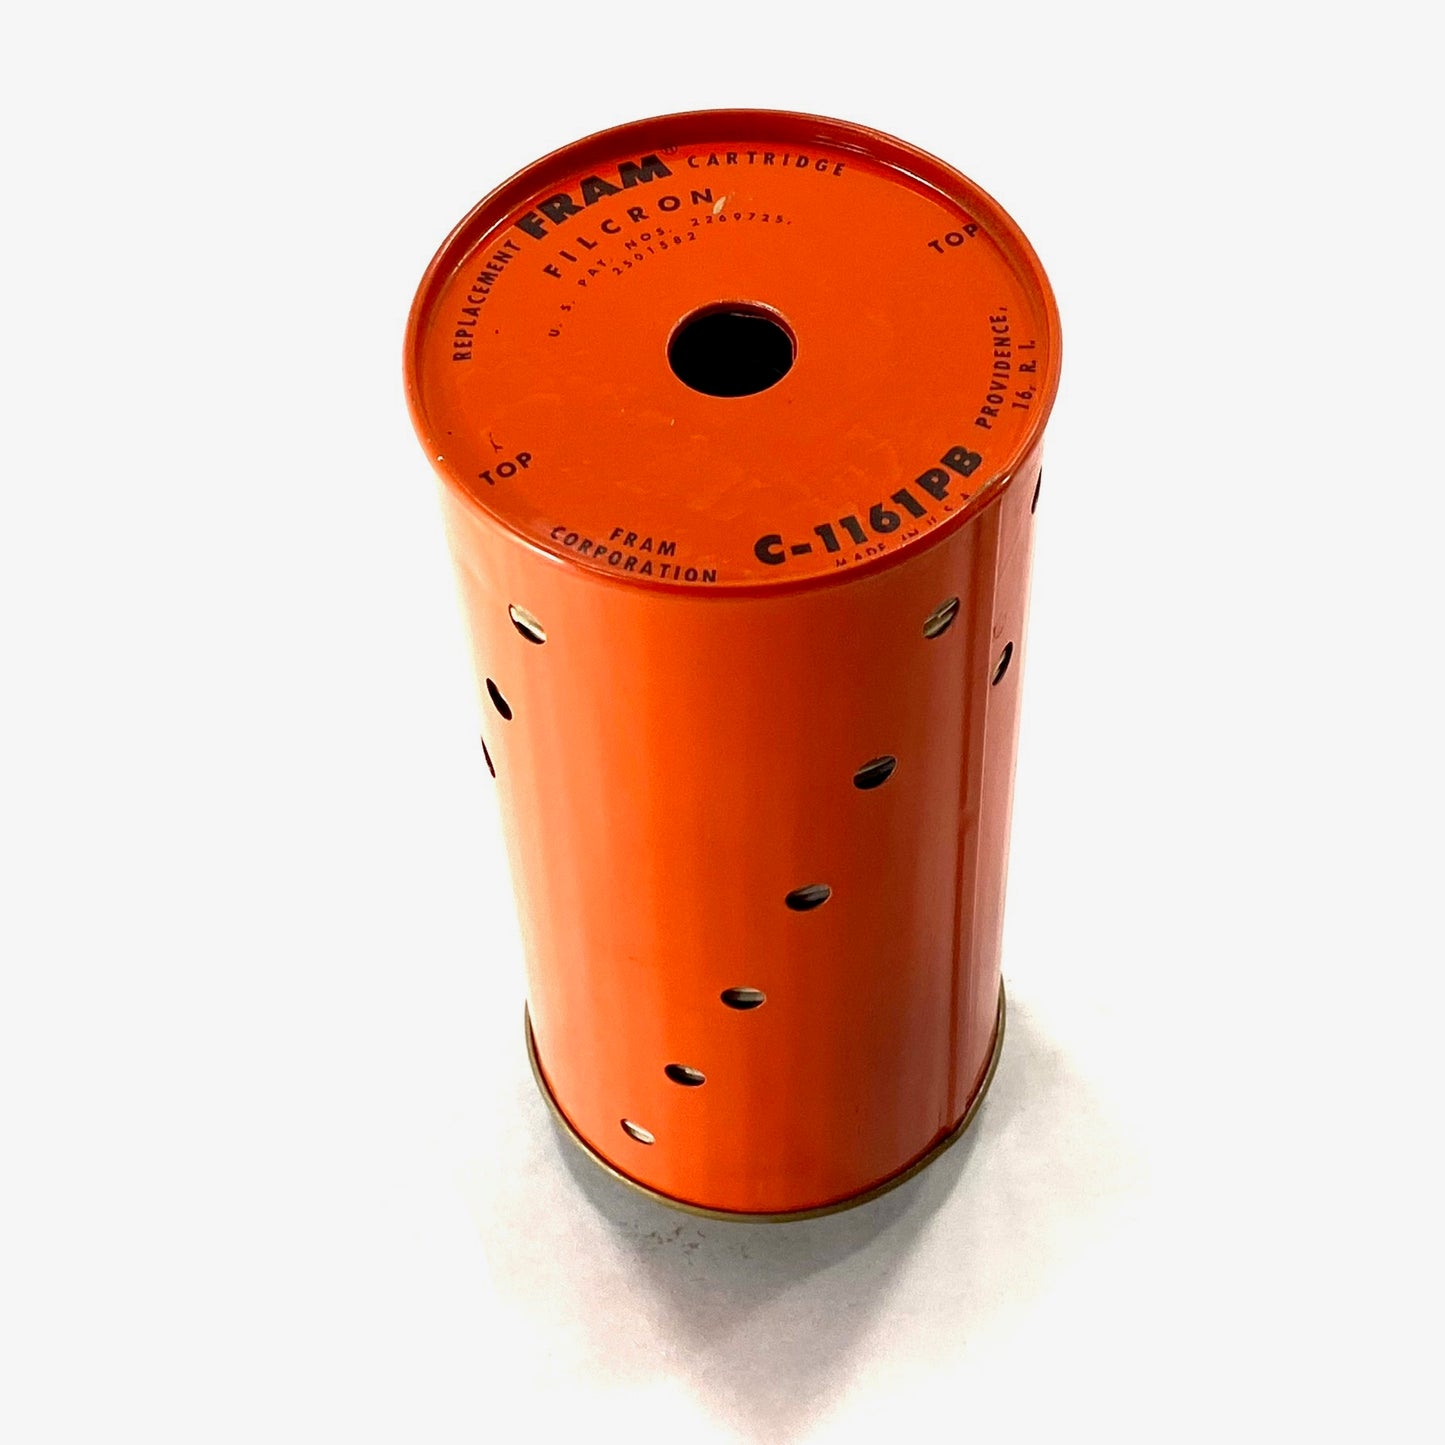 Fram C-1161PB Diesel Fuel Filter Cartridge NOS Fuel Oil Filter